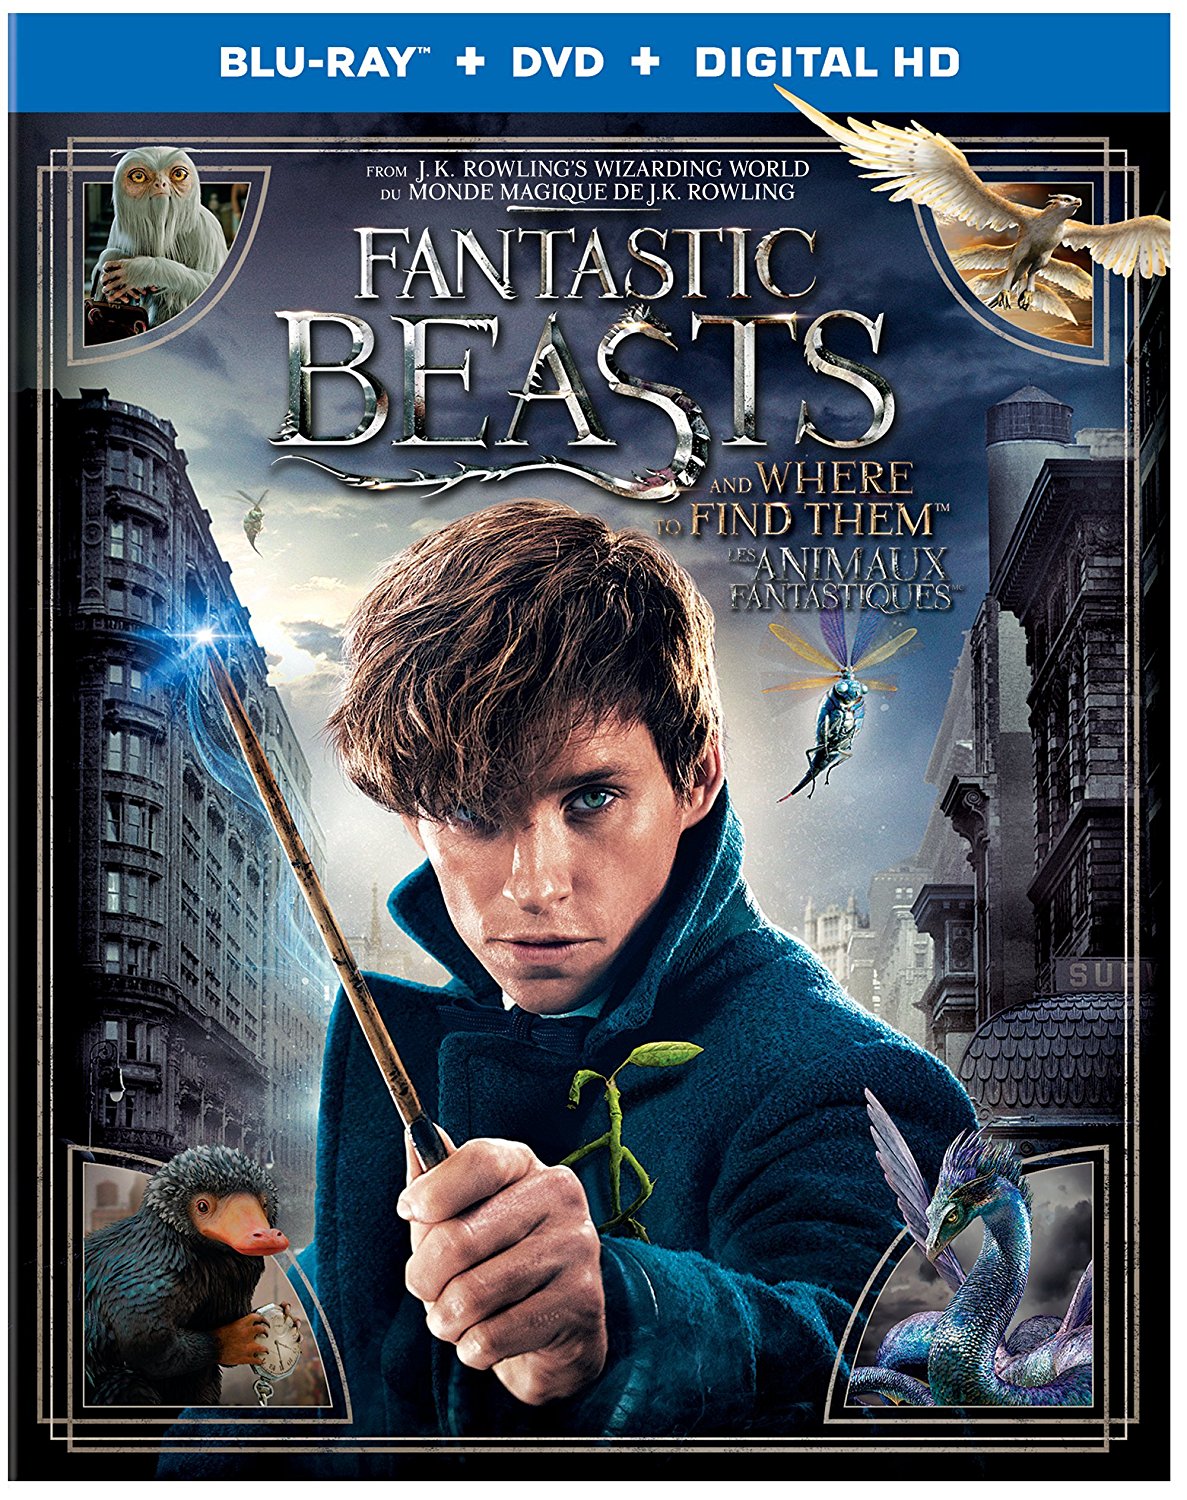 Fantastic Beasts on Blu-ray/DVD